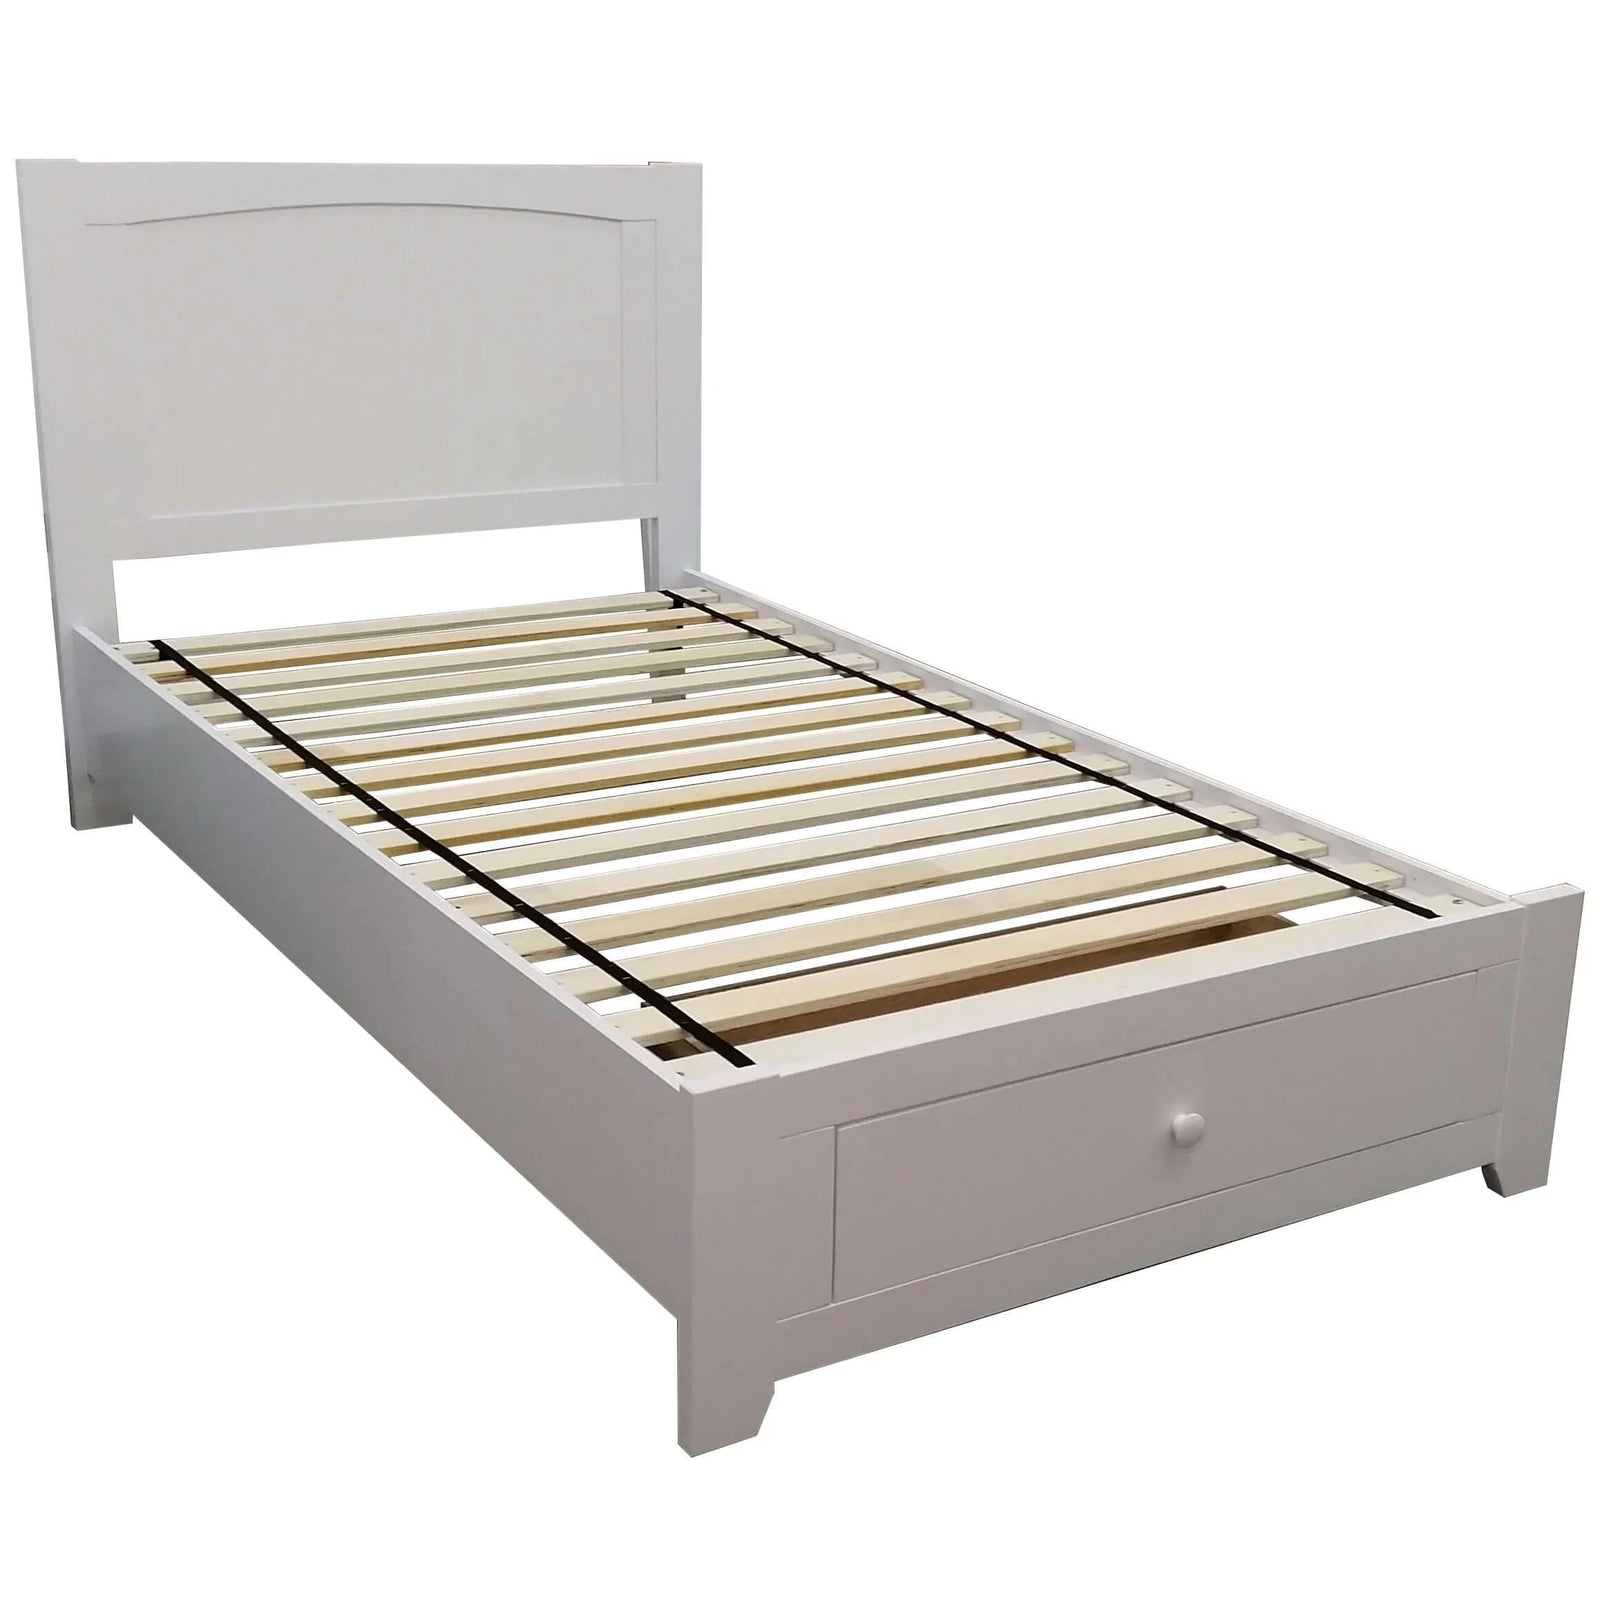 Buy wisteria bed frame king single size mattress base storage drawer timber wood-wht - upinteriors-Upinteriors